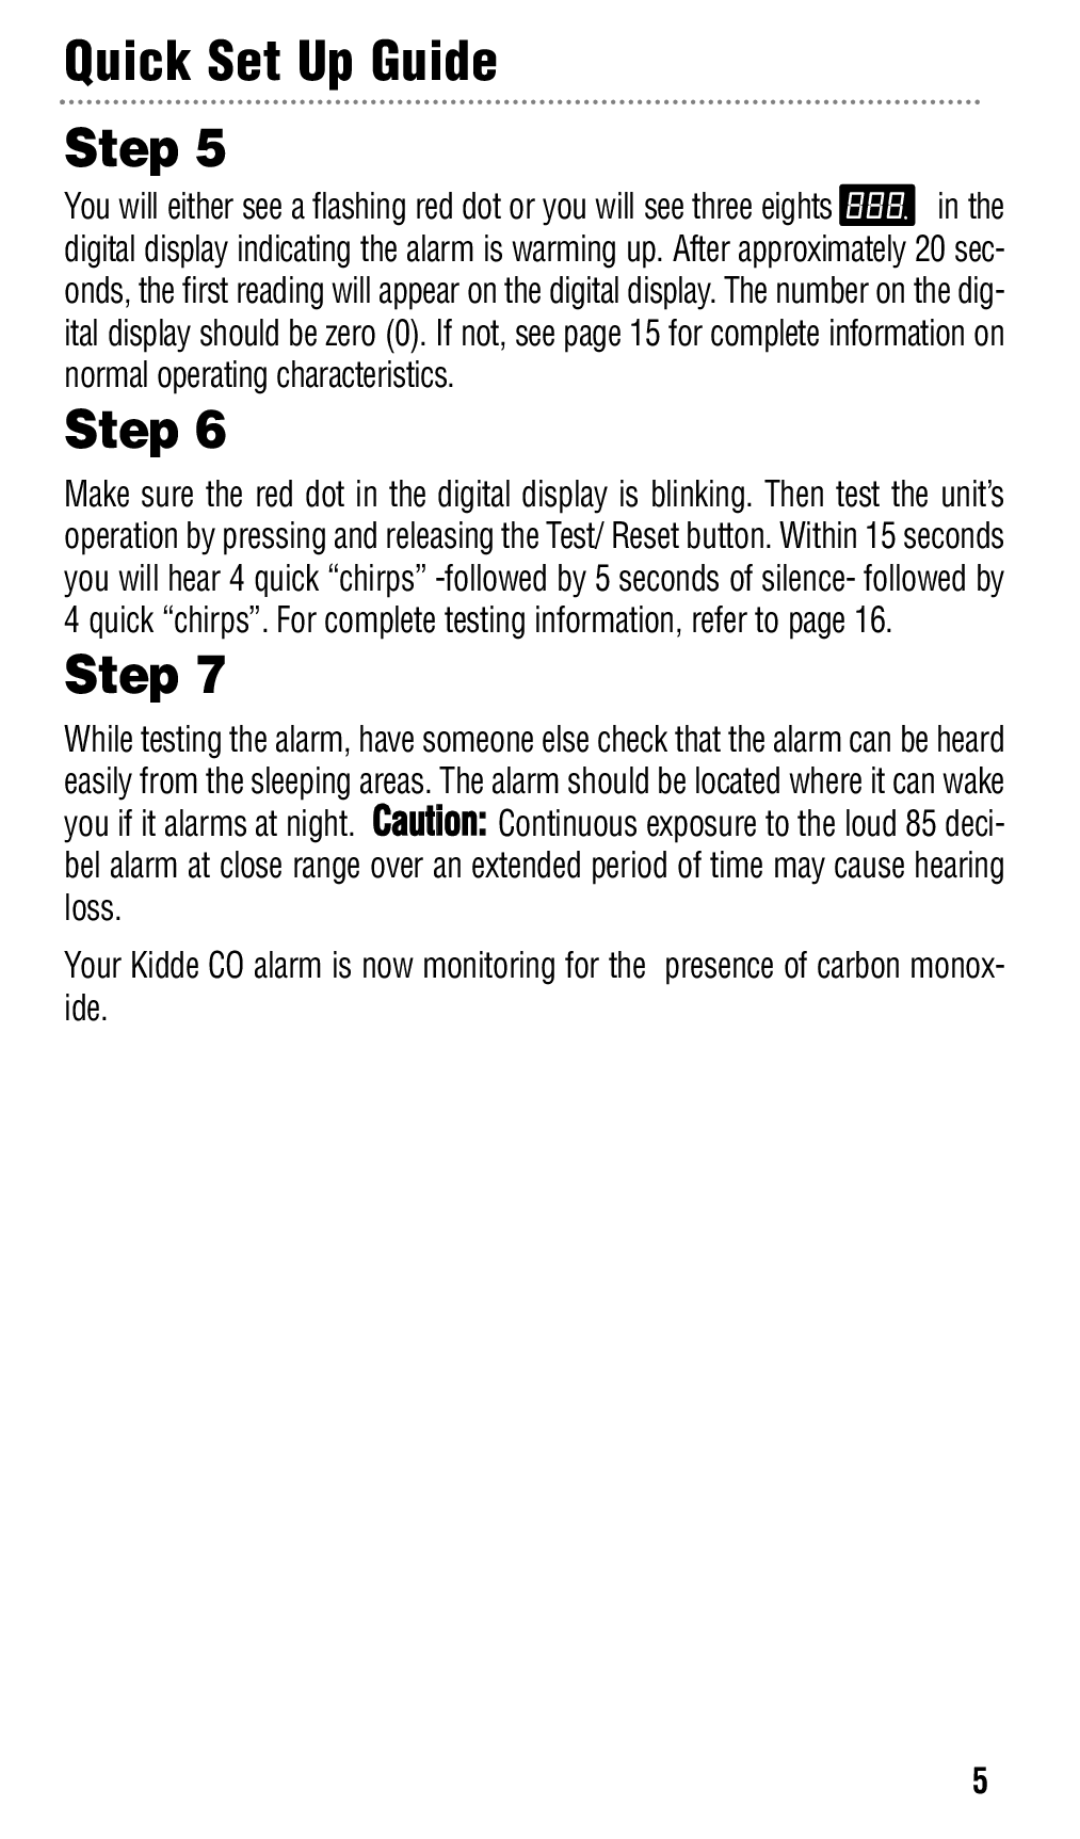 Kidde KN-COPP-3 manual Quick Set Up Guide Step 